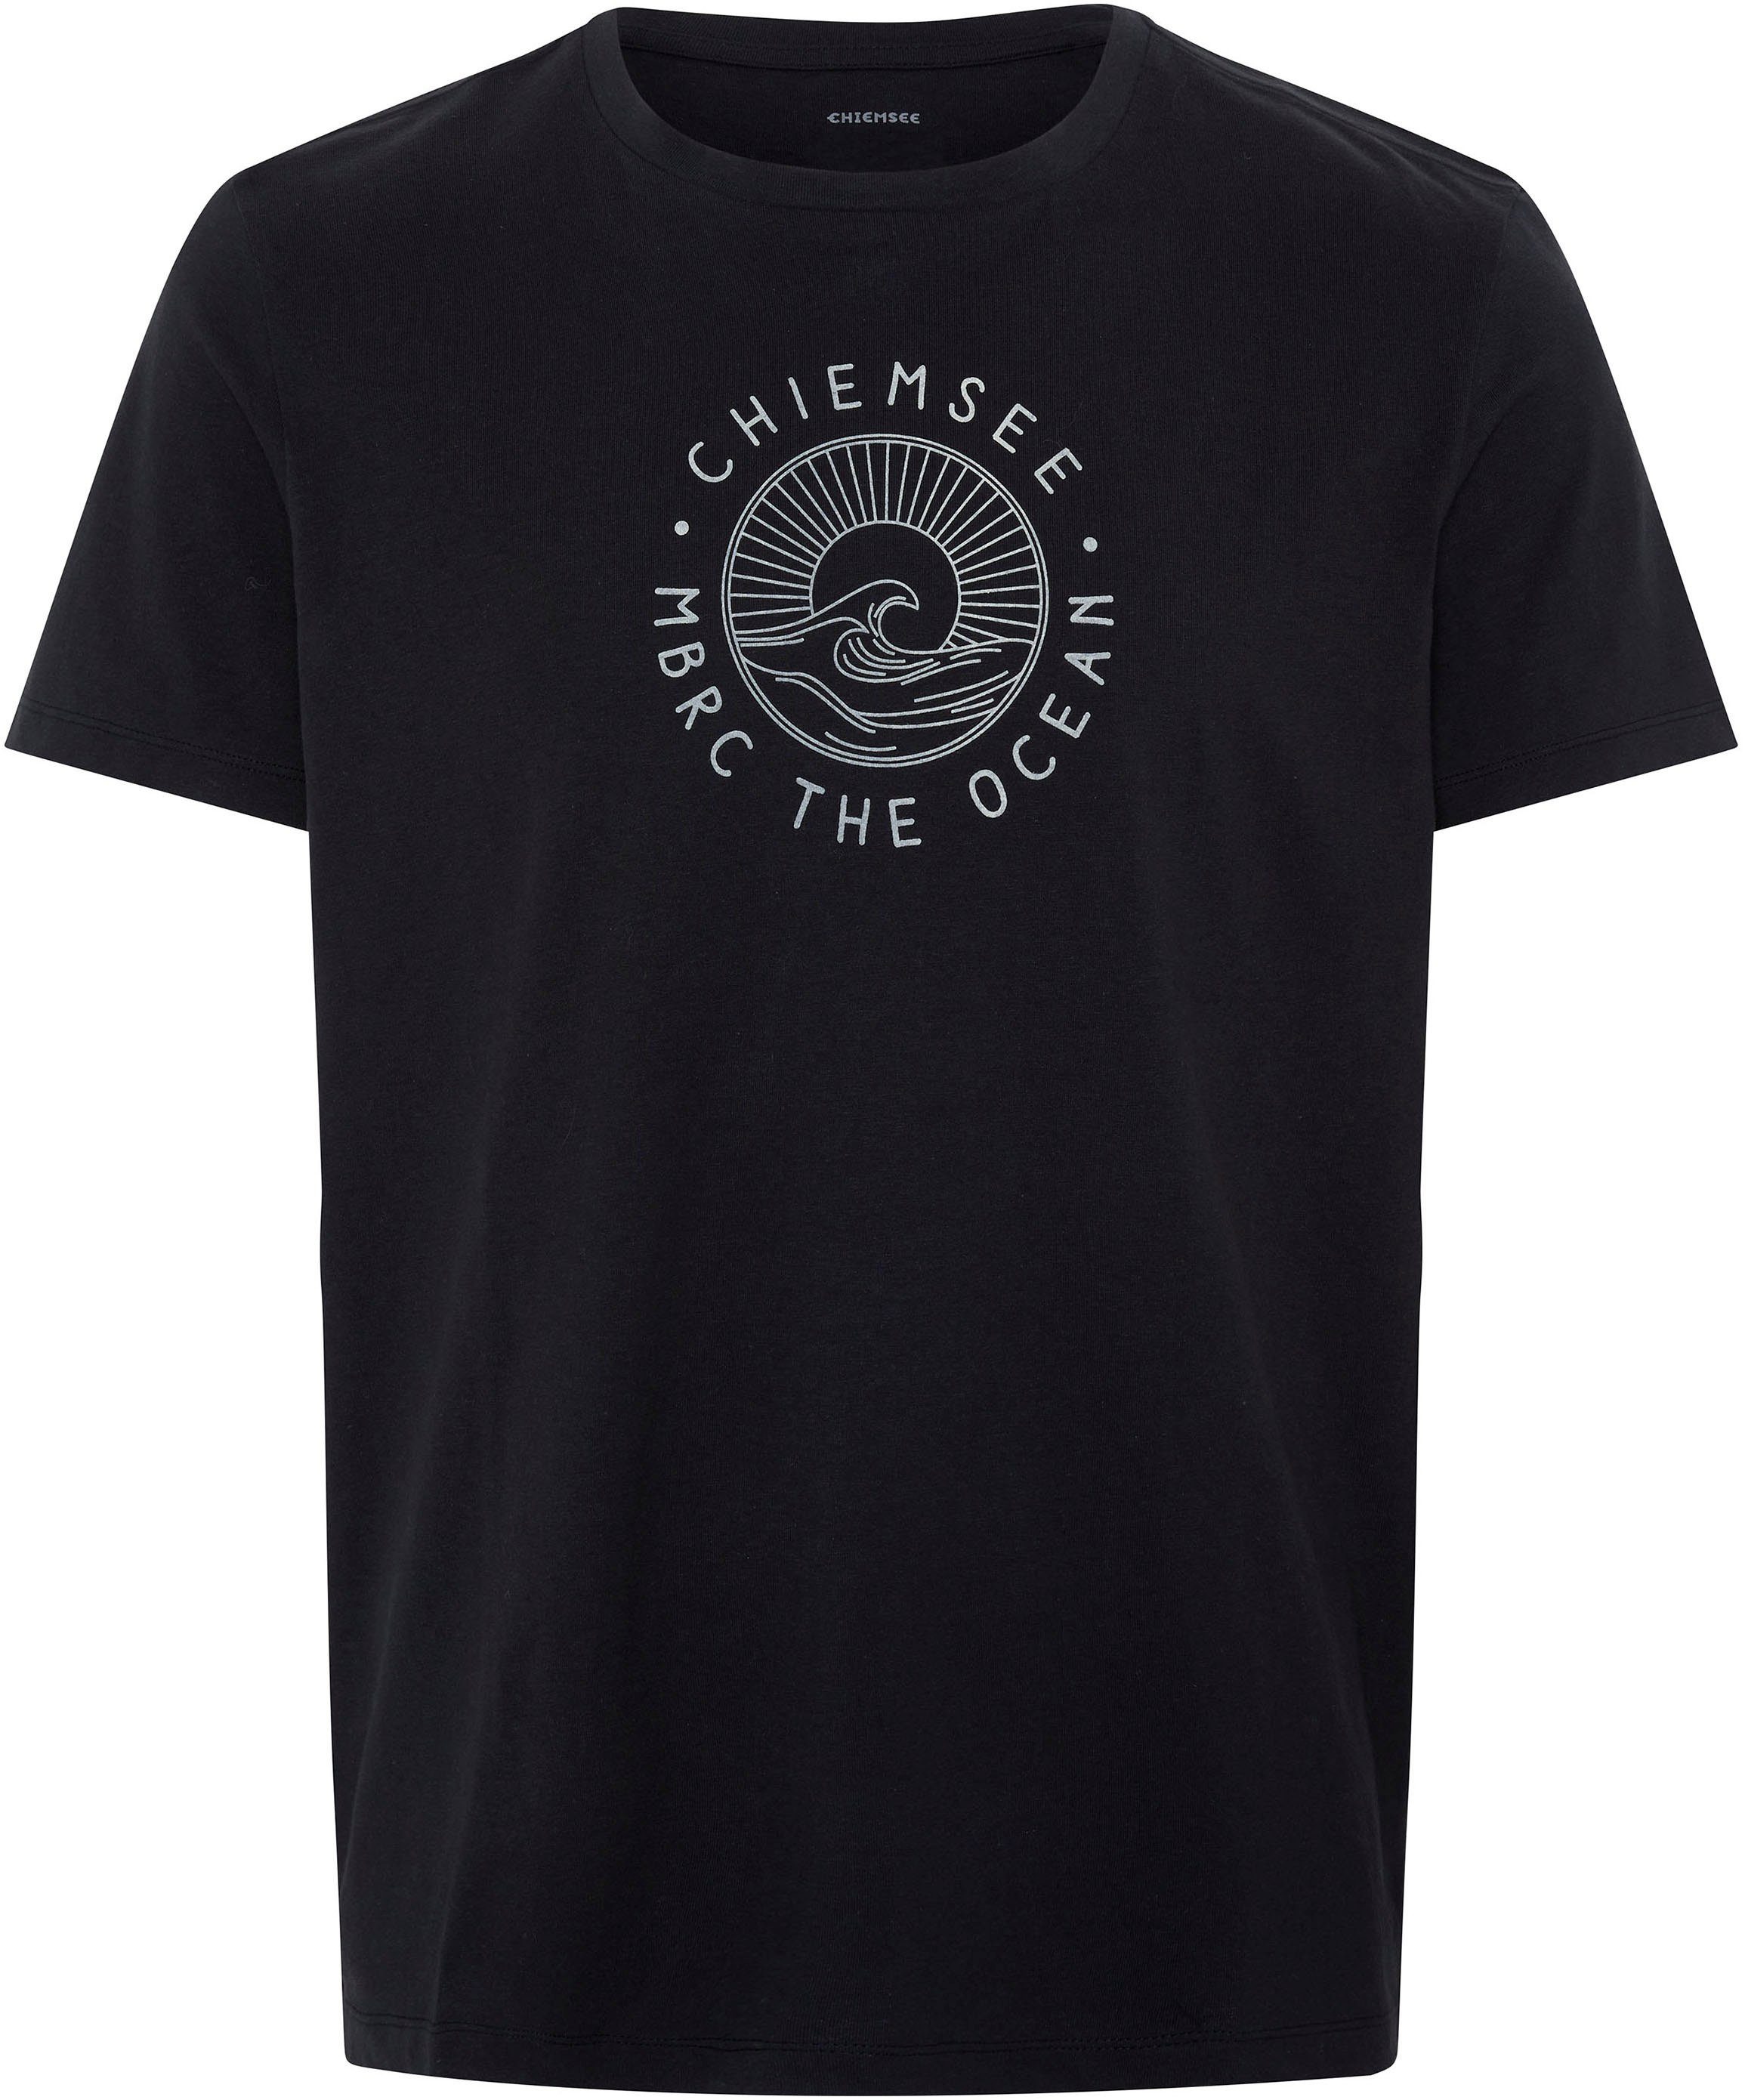 Chiemsee T-Shirt Black